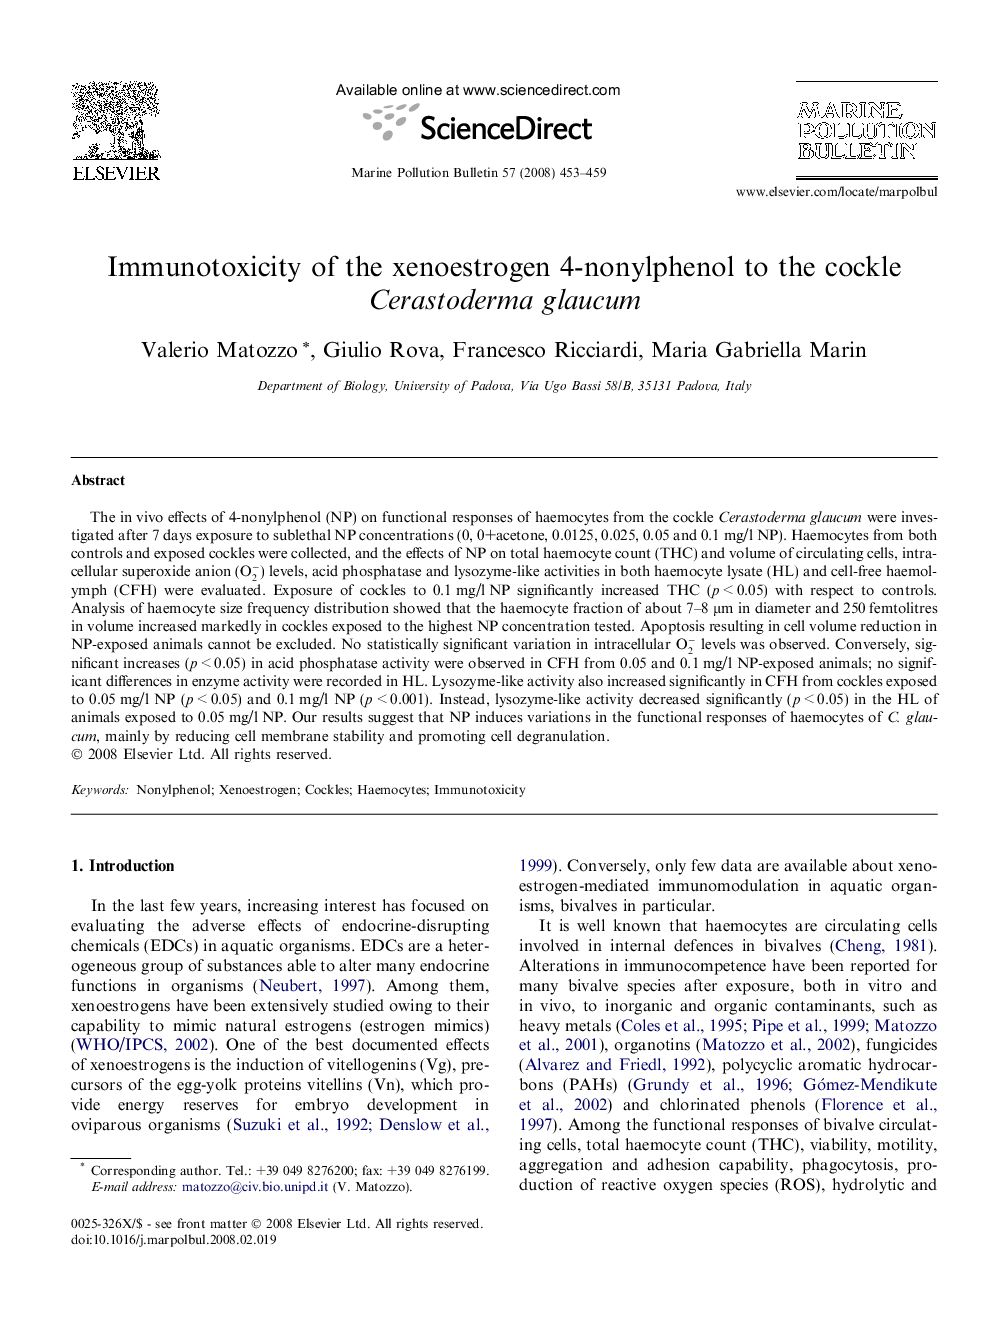 Immunotoxicity of the xenoestrogen 4-nonylphenol to the cockle Cerastoderma glaucum